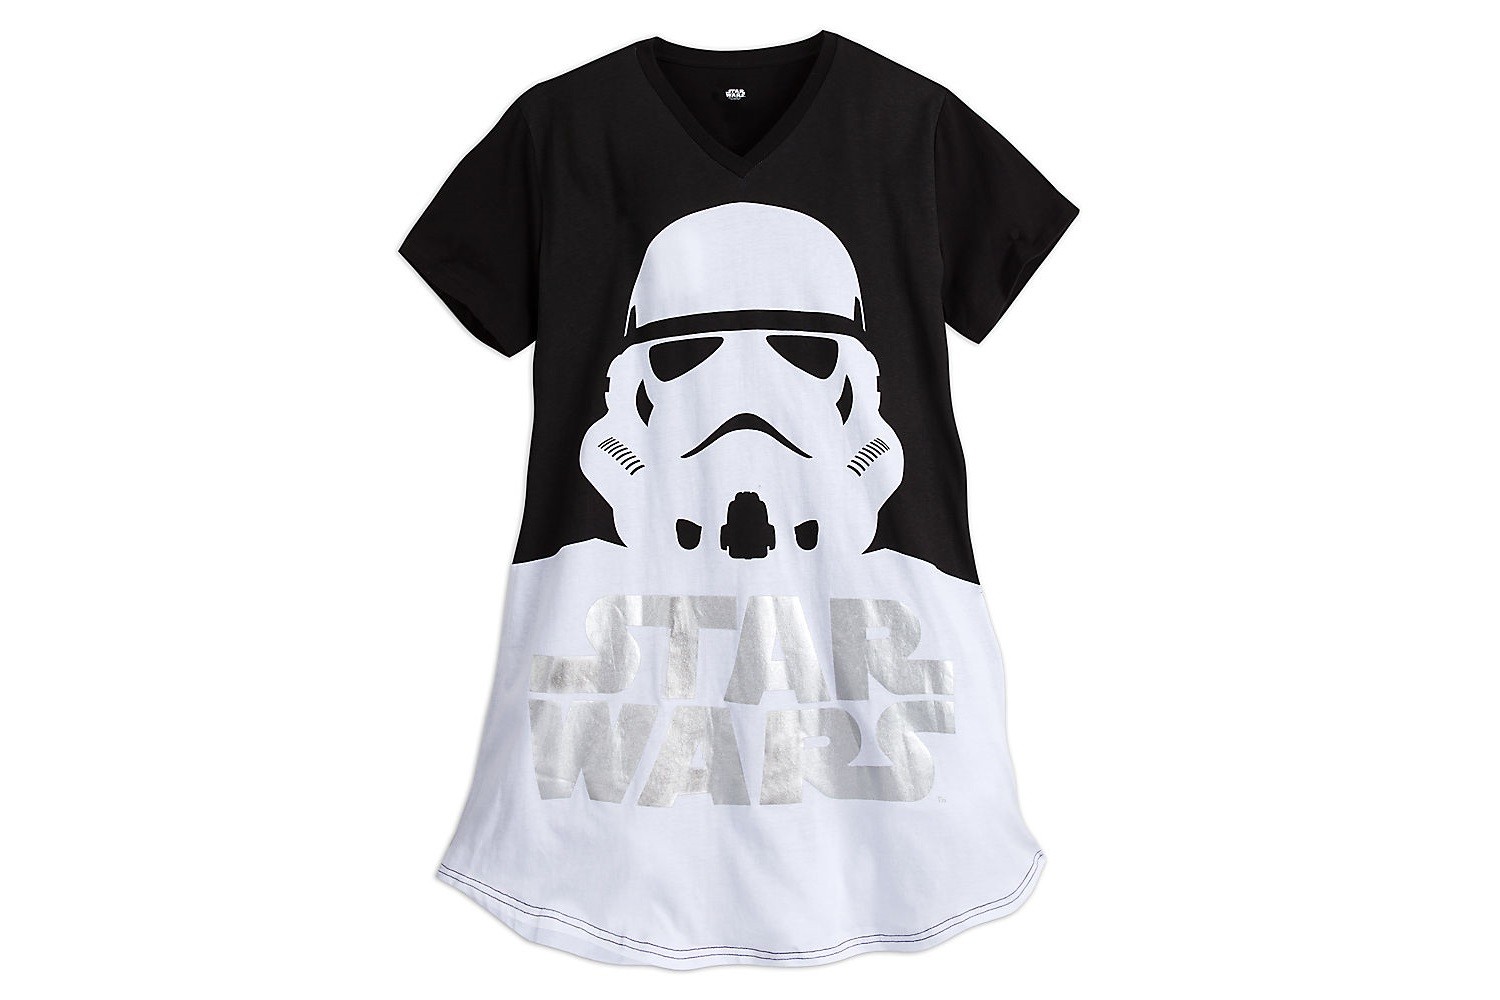 Stormtrooper nightshirt at Disney Store